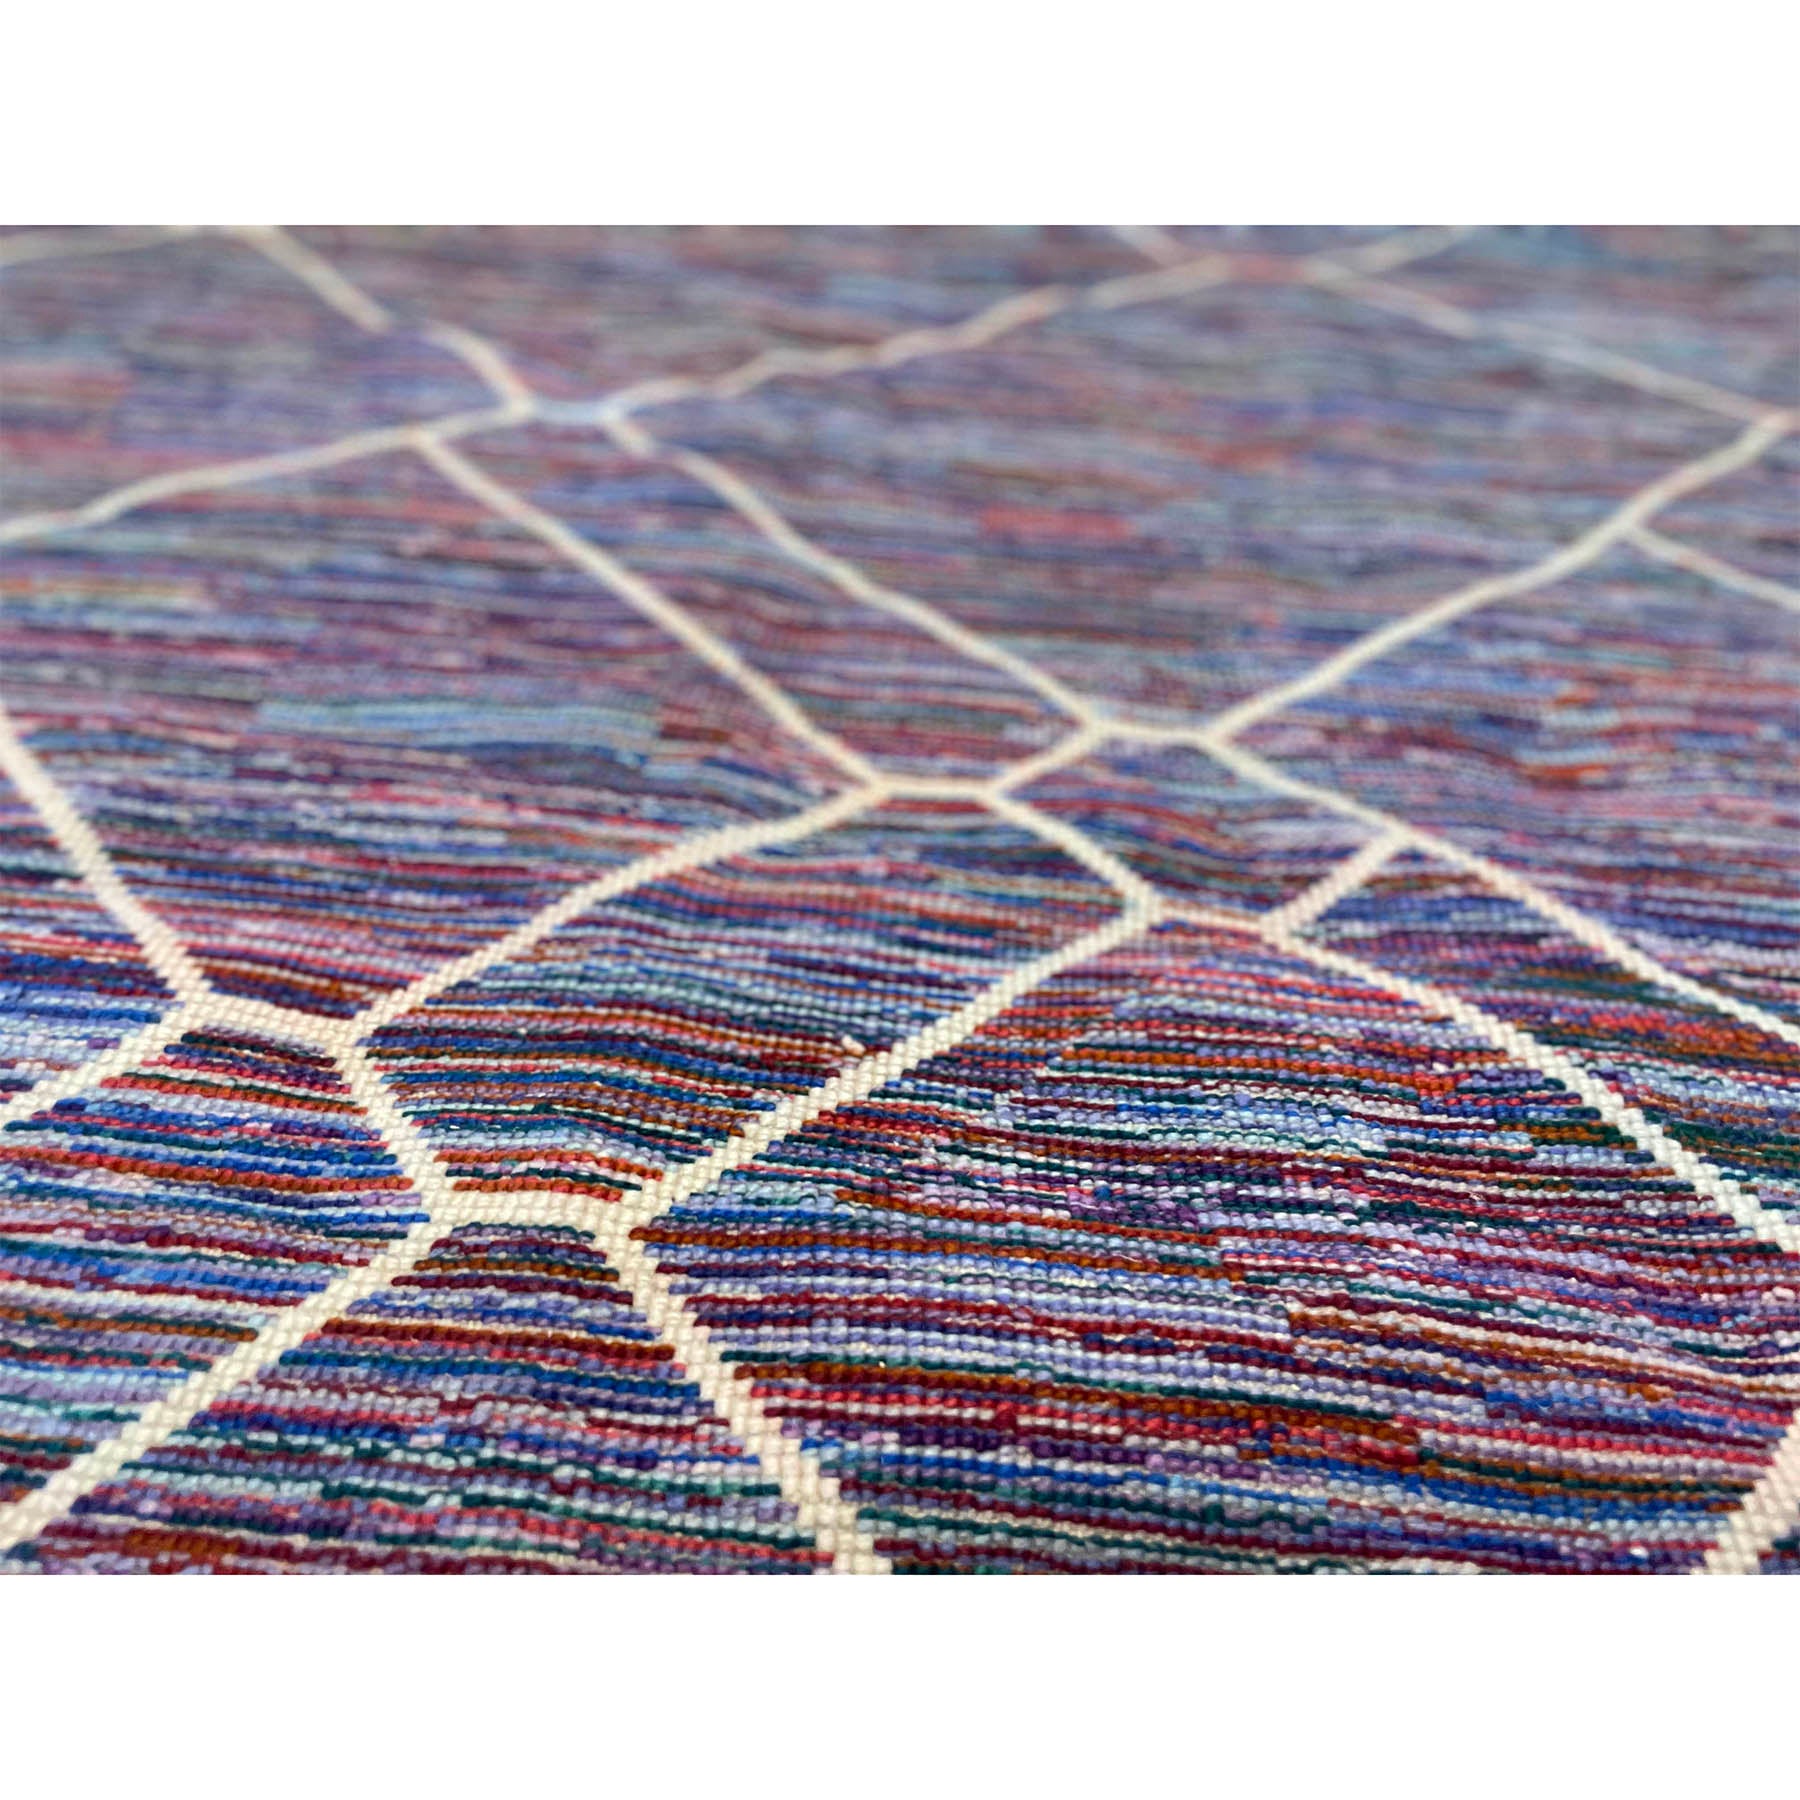 Handwoven colorful Beni Mrirt Moroccan area rug - Kantara | Moroccan Rugs